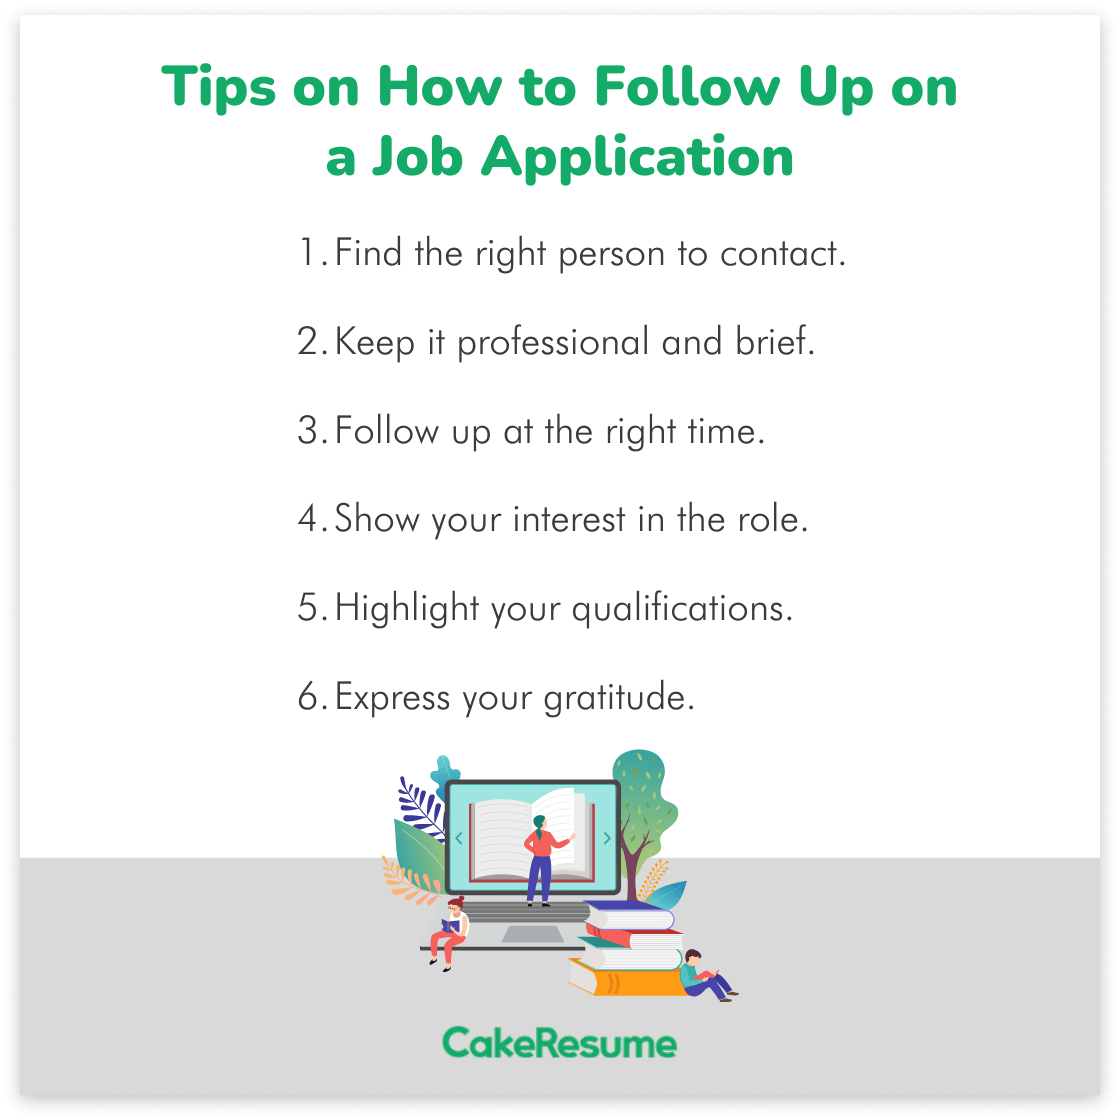 follow up on a job application tips